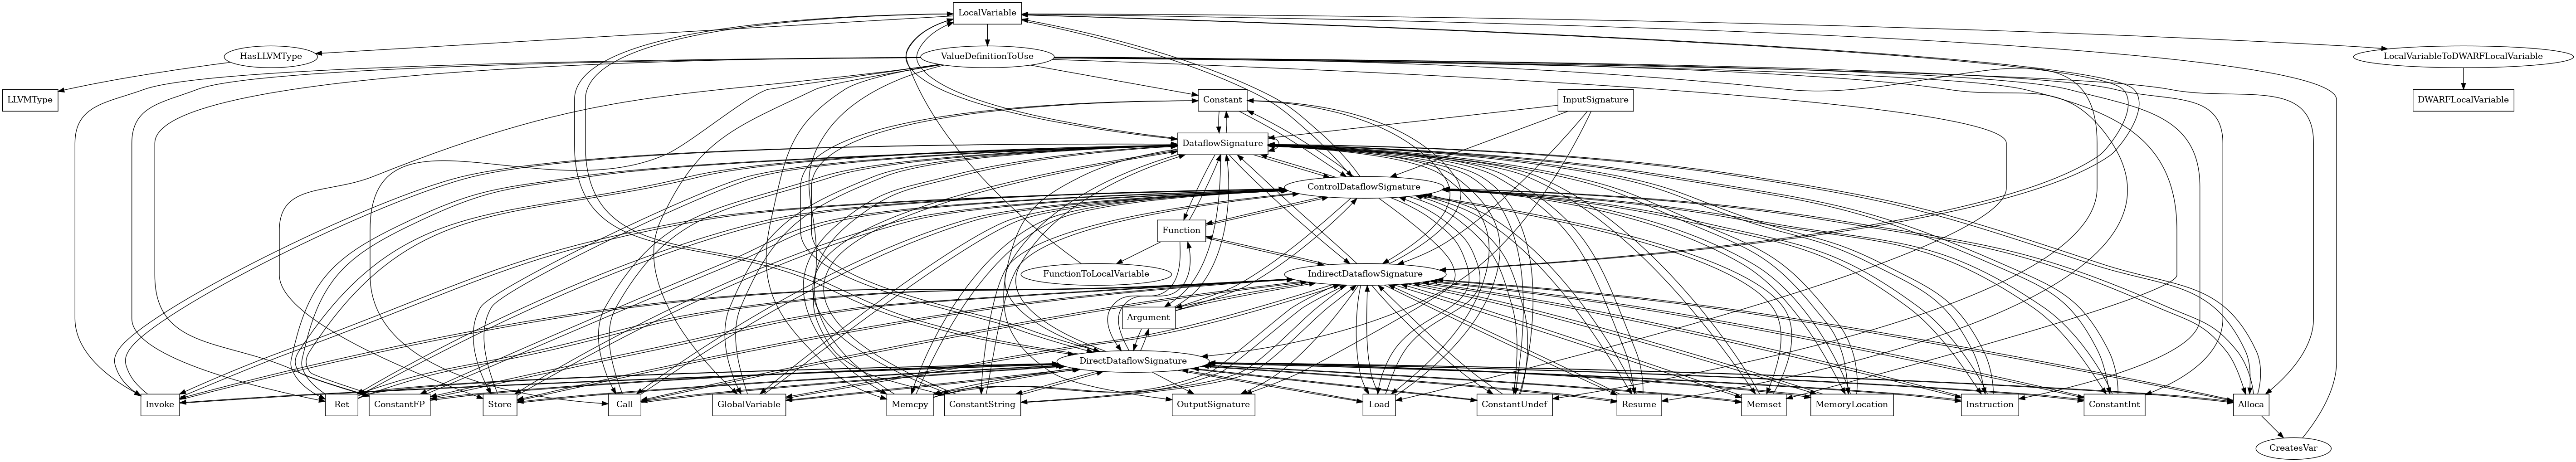 Entity-relationship diagram for LocalVariable nodes